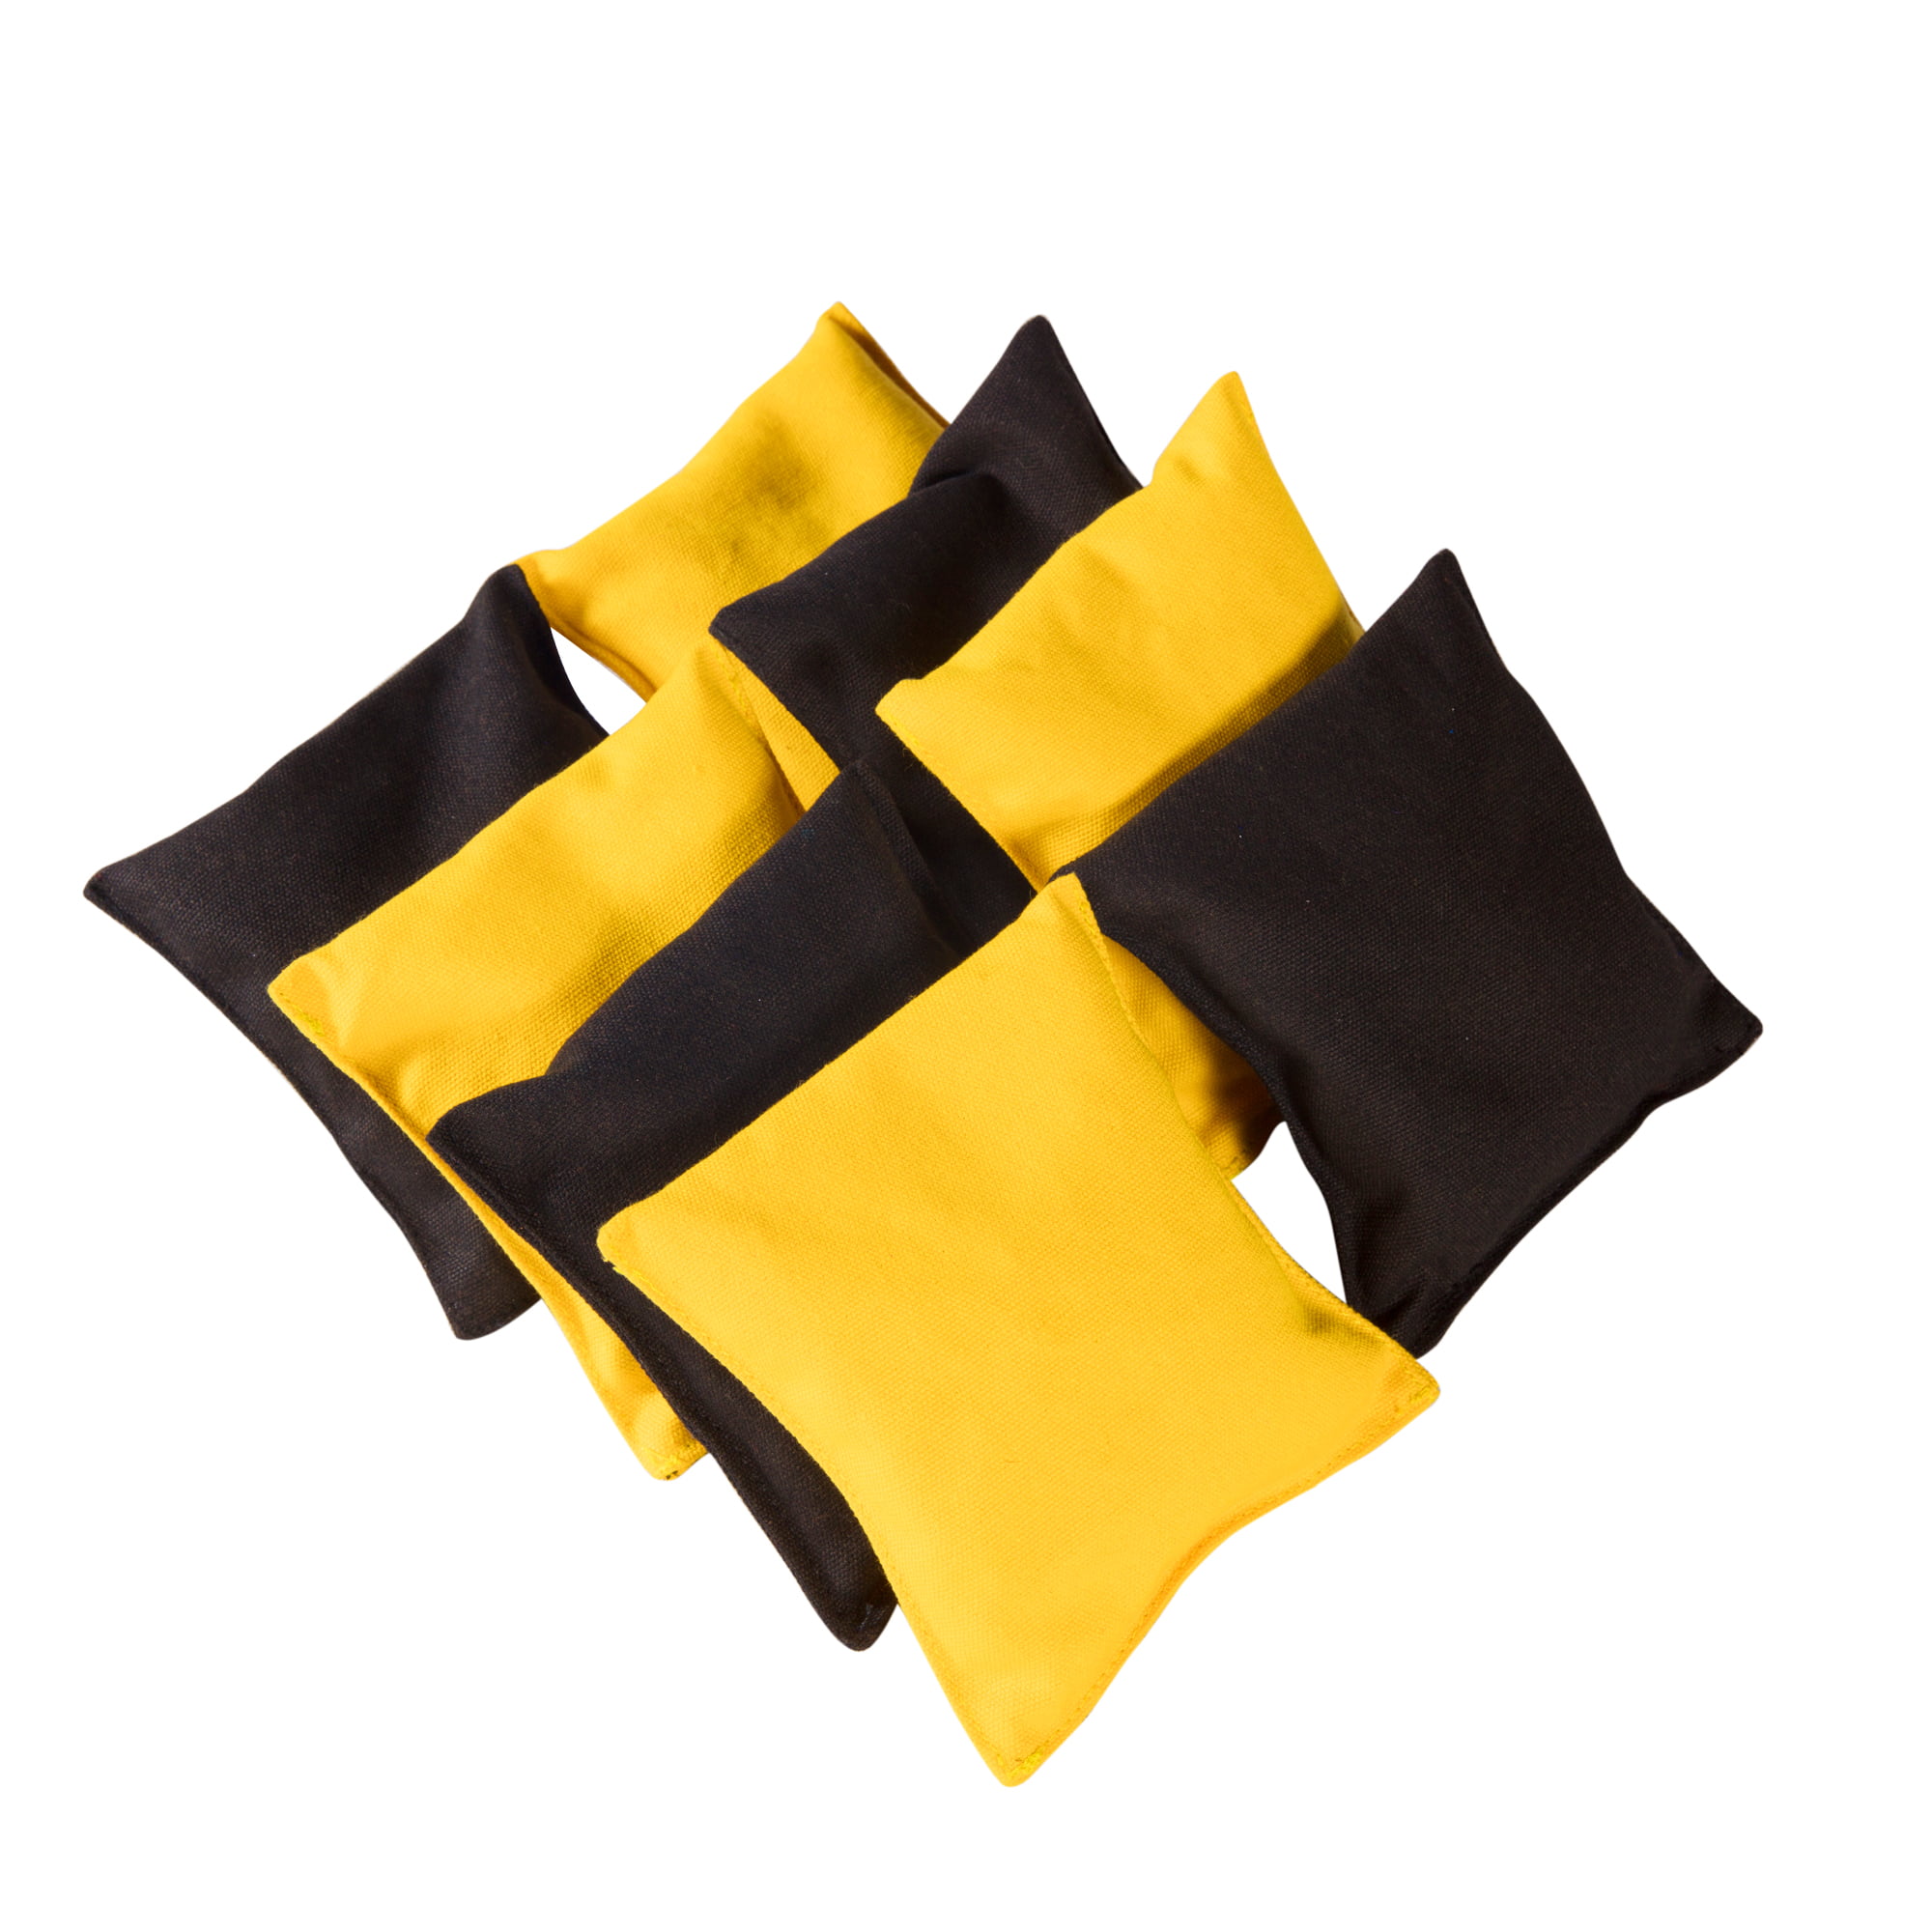 Cornhole Bean Bags Replacement - Yellow & Black - www.ermes-unice.fr